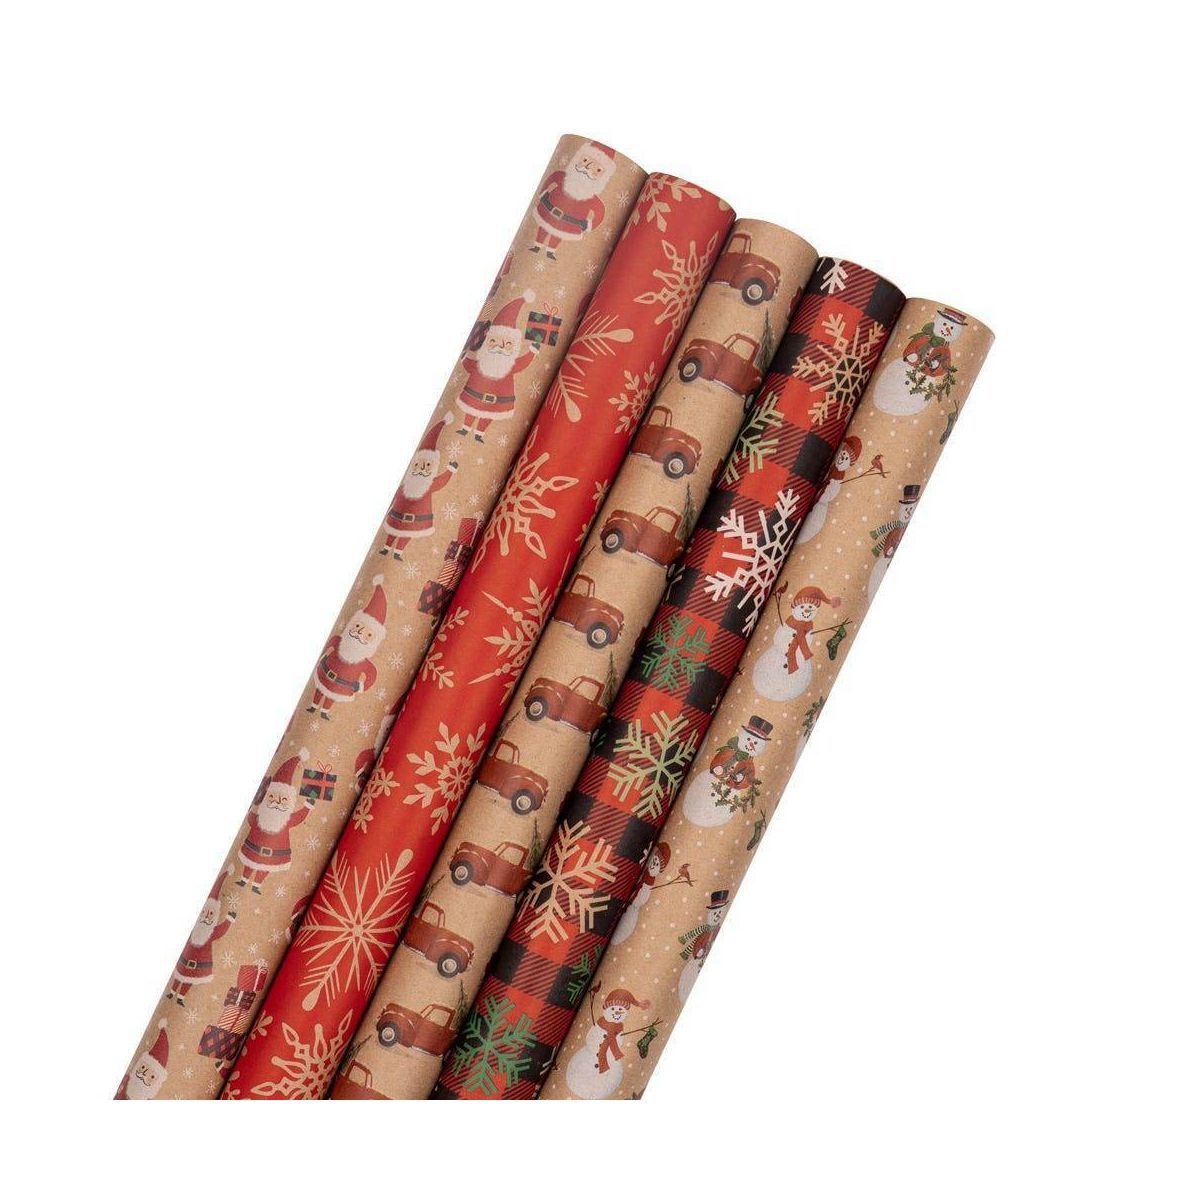 JAM Paper & Envelope 5ct Premium Kraft Christmas Gift Wrap Rolls | Target